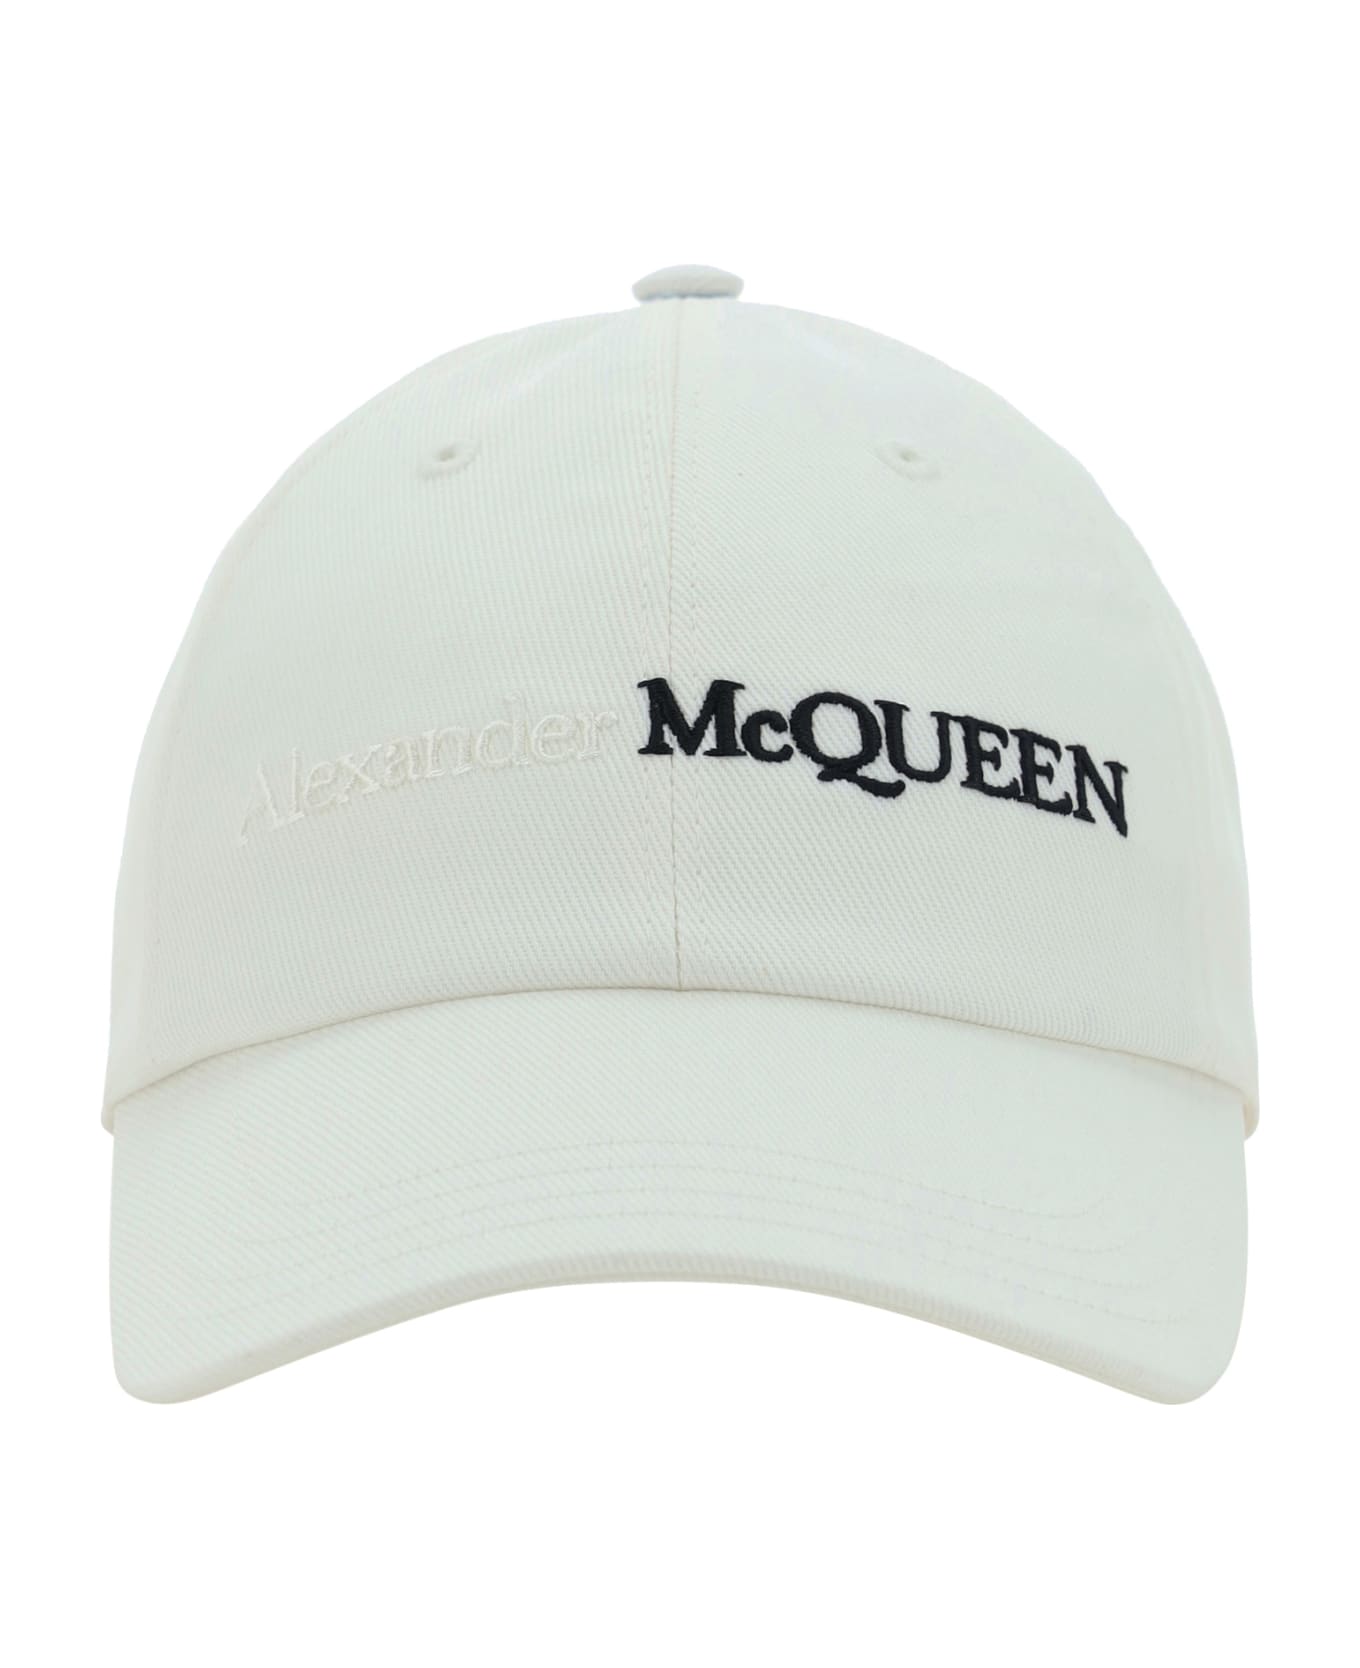 Alexander McQueen Logo Embroidered Baseball Cap - White/black 帽子